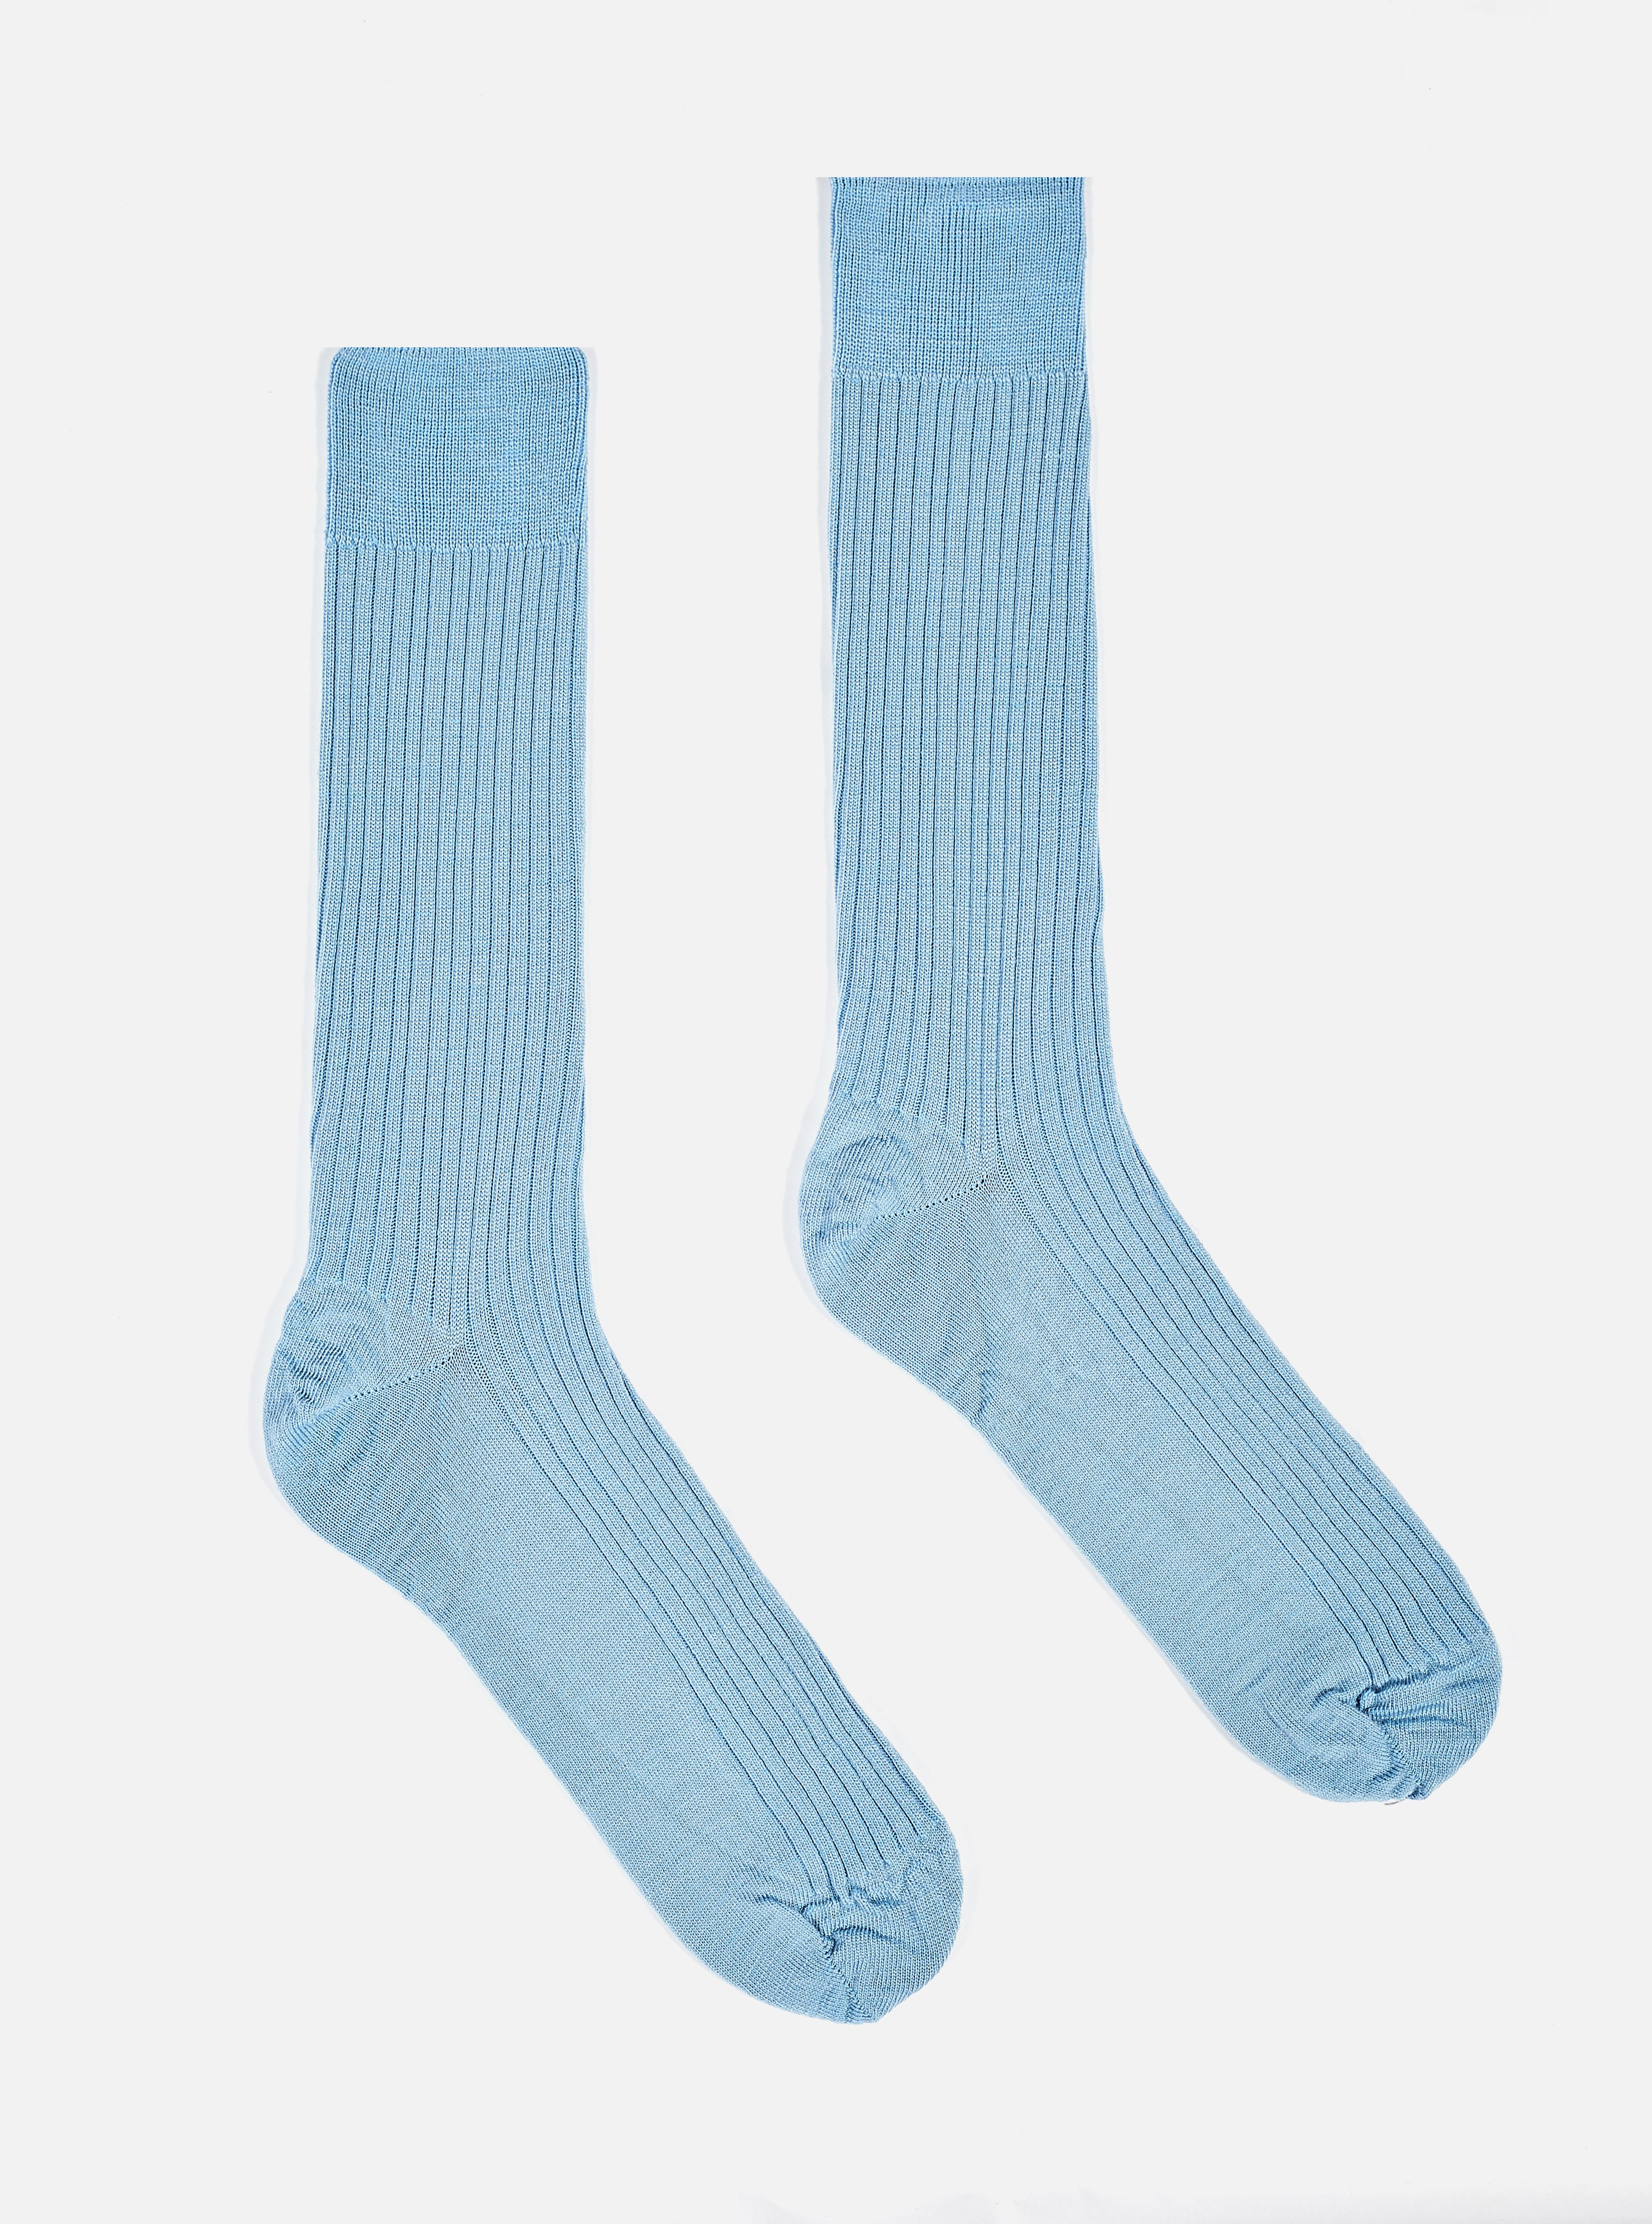 Universal Works Base Sock in Cornish Blue Merino